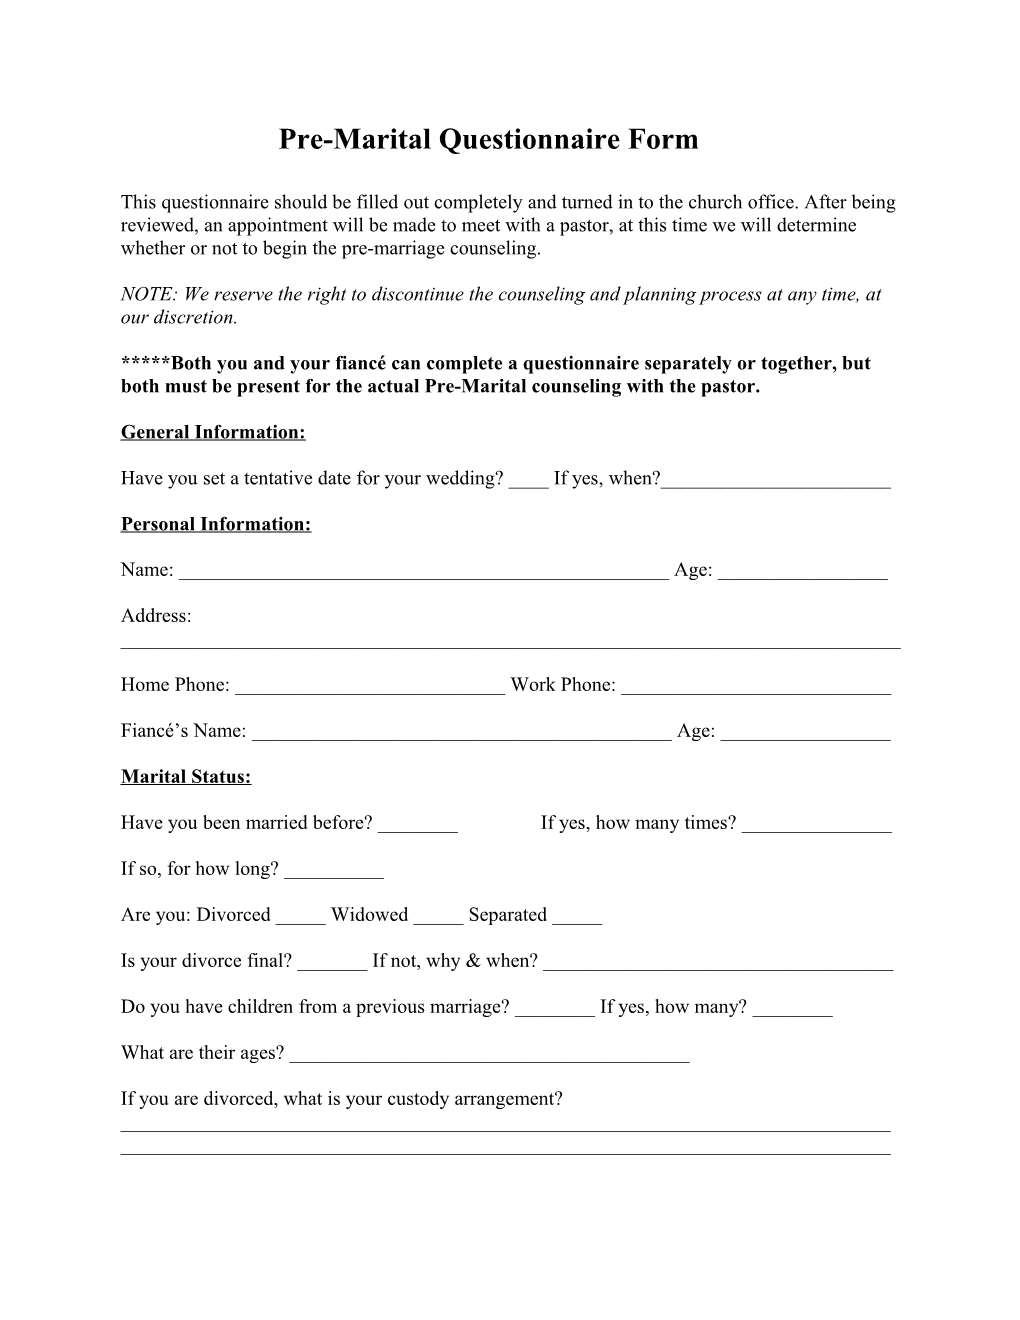 Pre-Marital Questionnaire Form